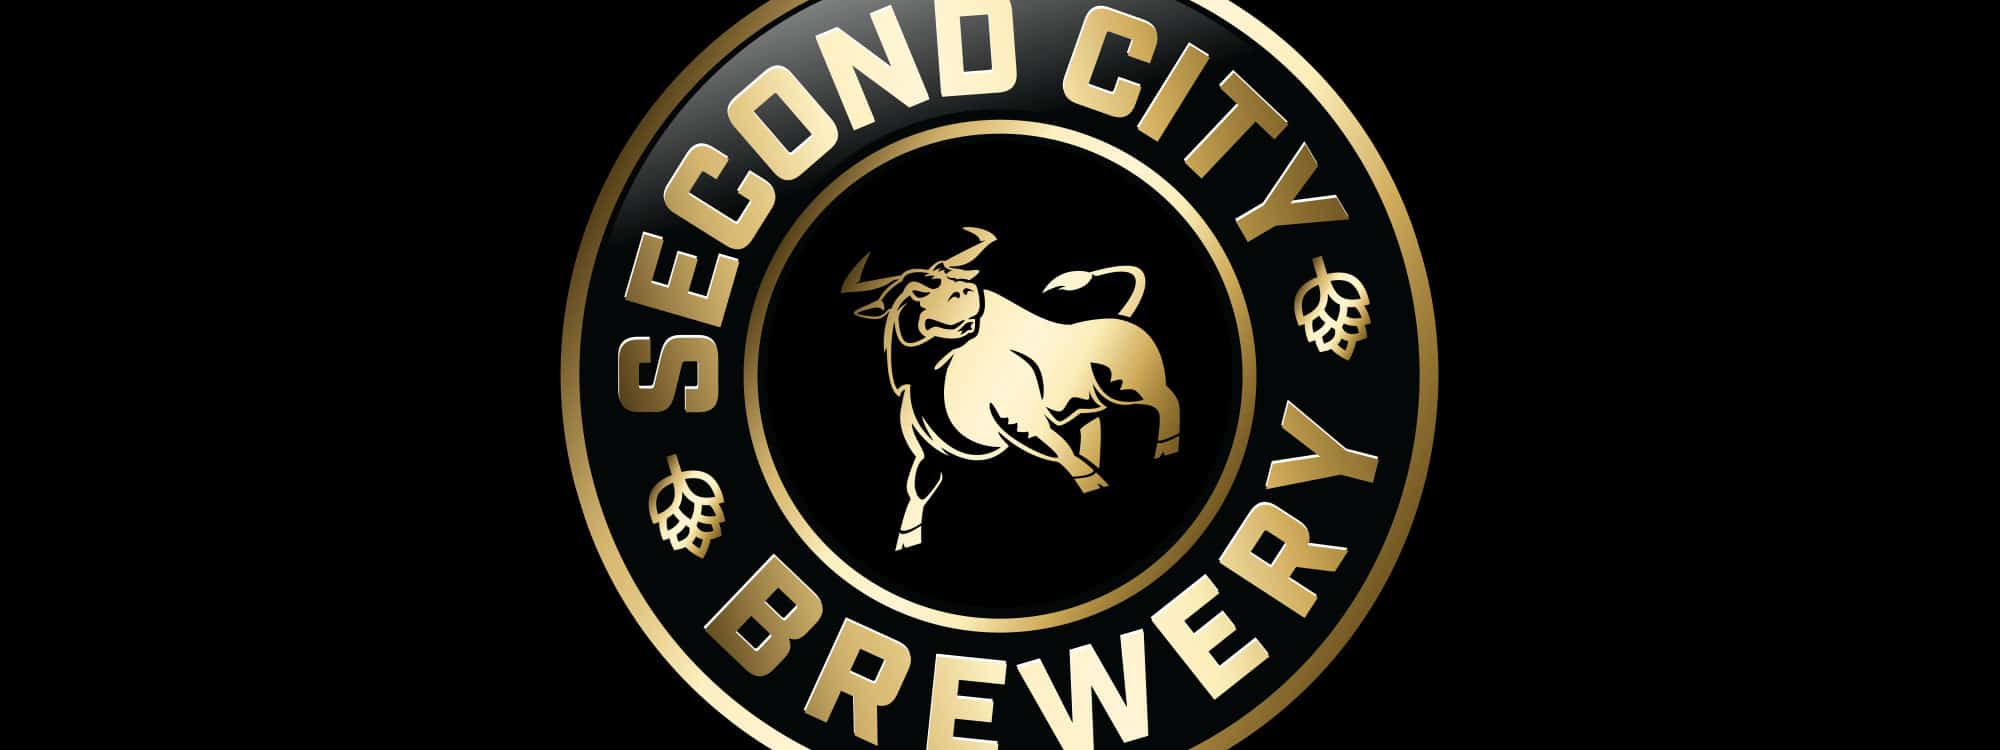 Logo Design Birmingham for Brewery